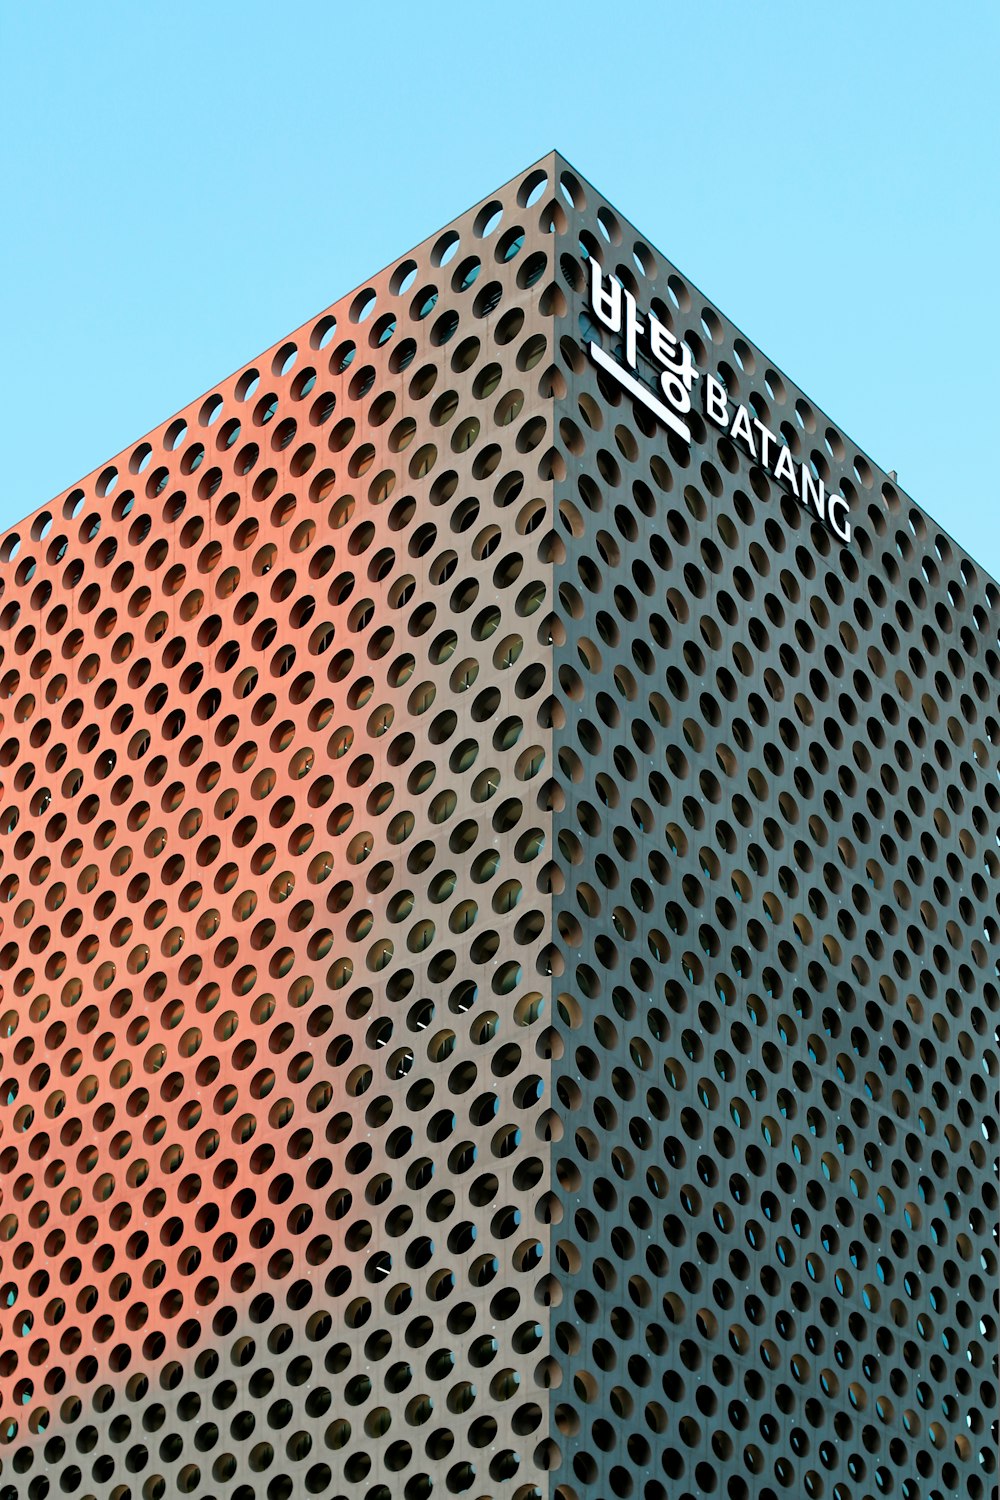 Batang building